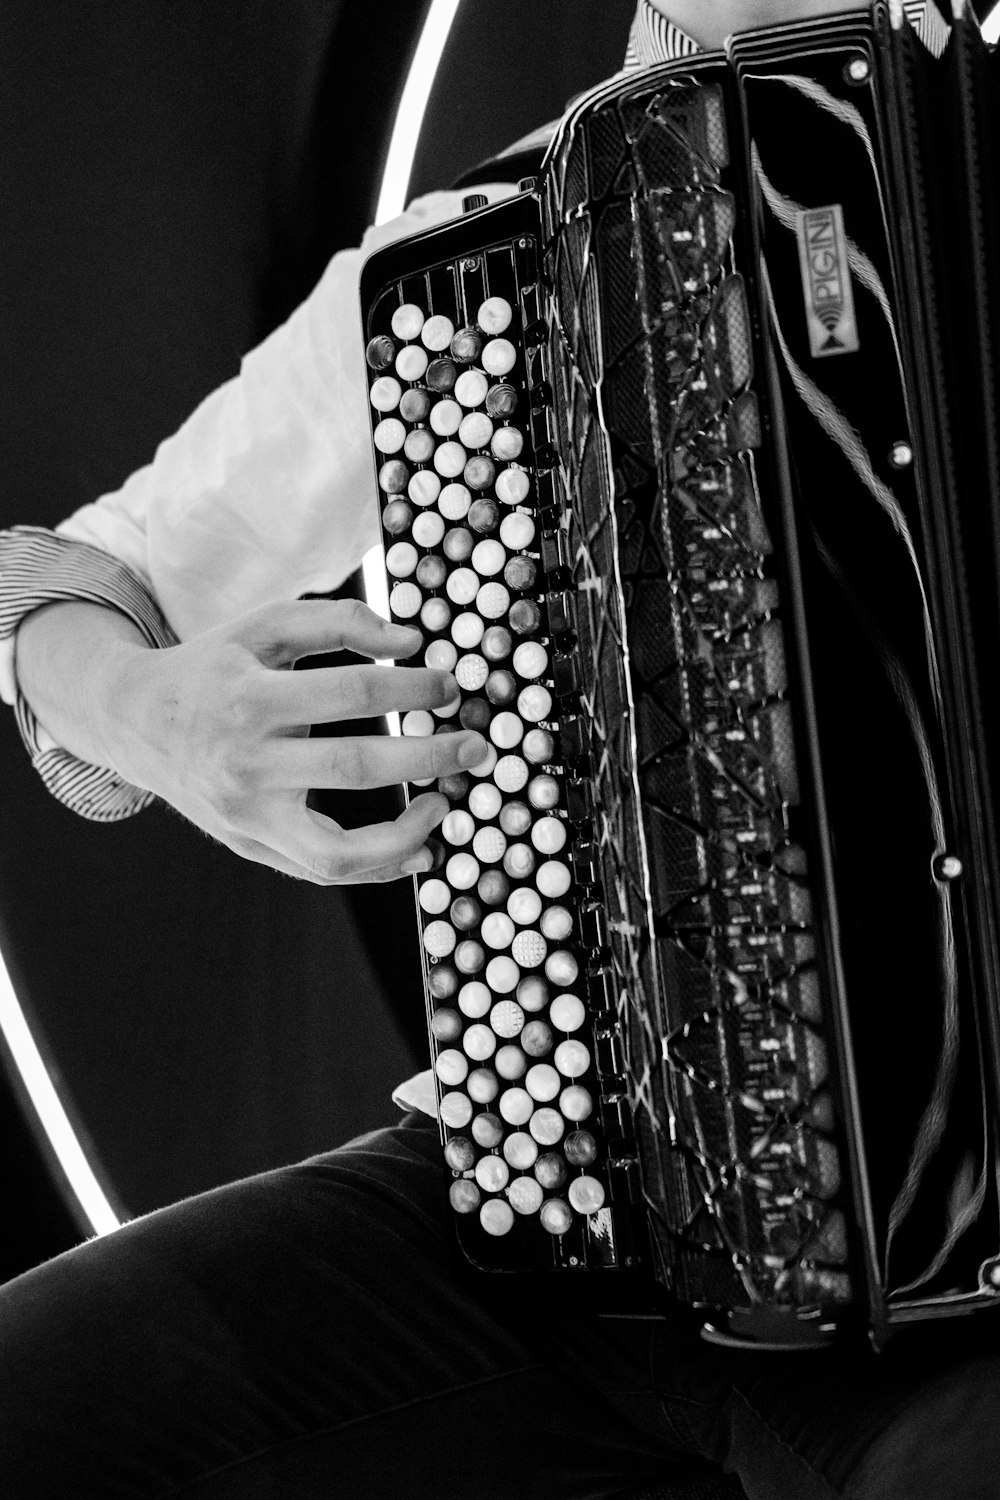 person holding black and white polka dot textile